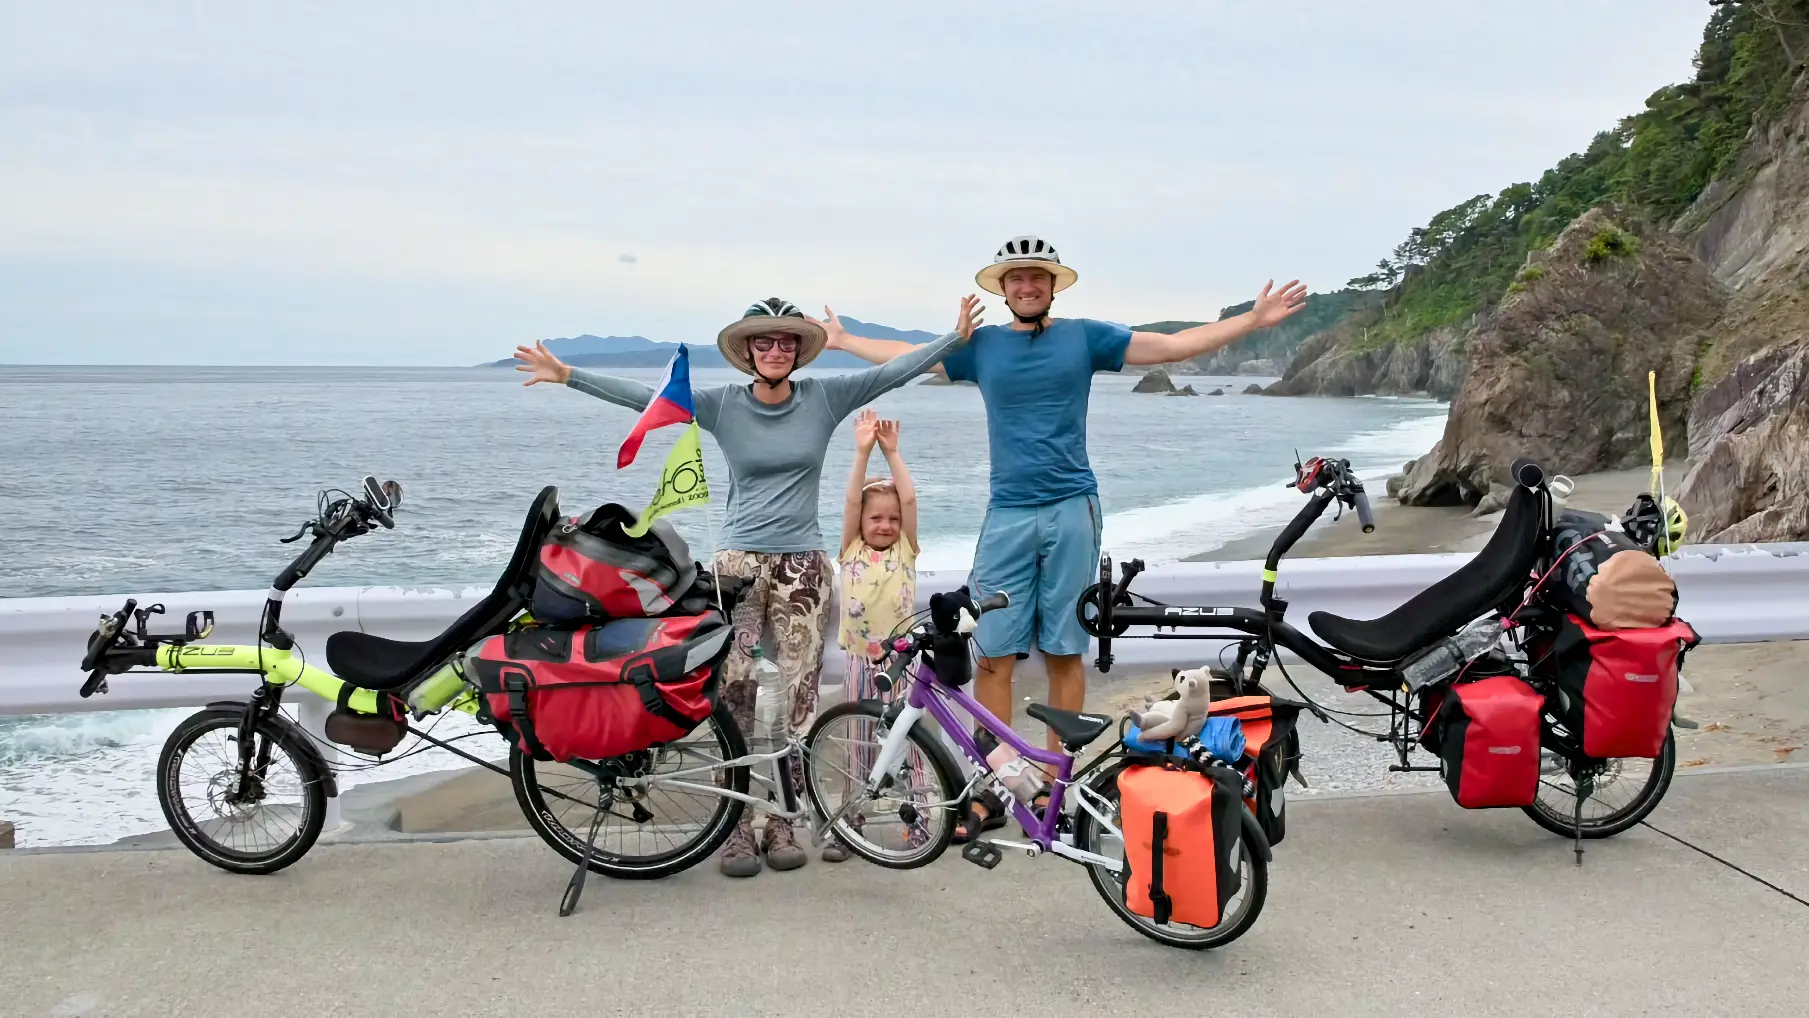 Karel Triska and his Family touring Japan on recumbent bikes